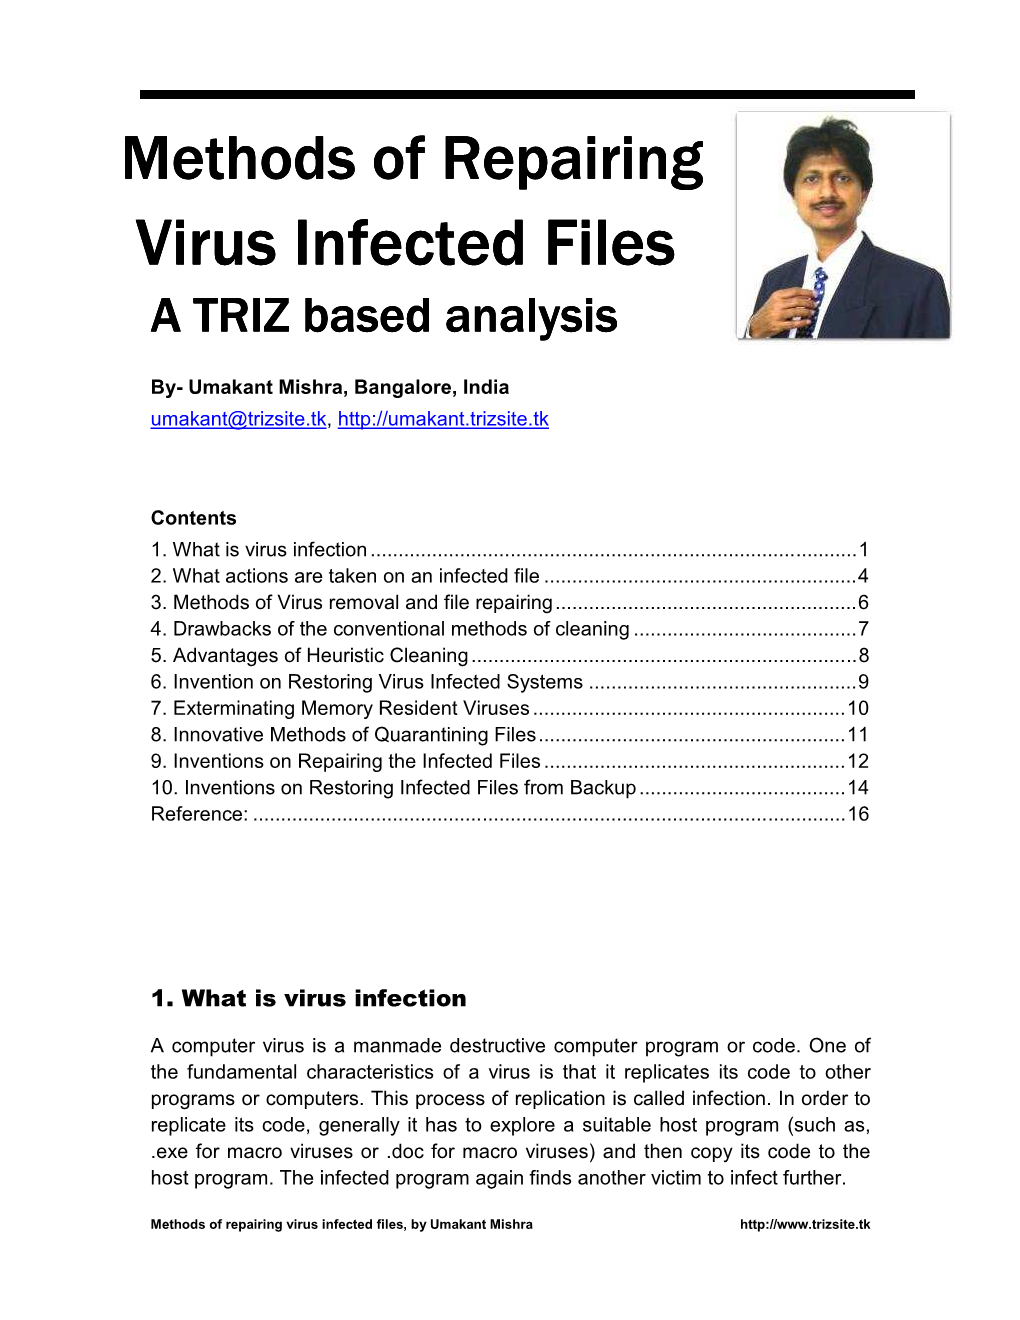 Methods of Repairing Virus-Infected Files